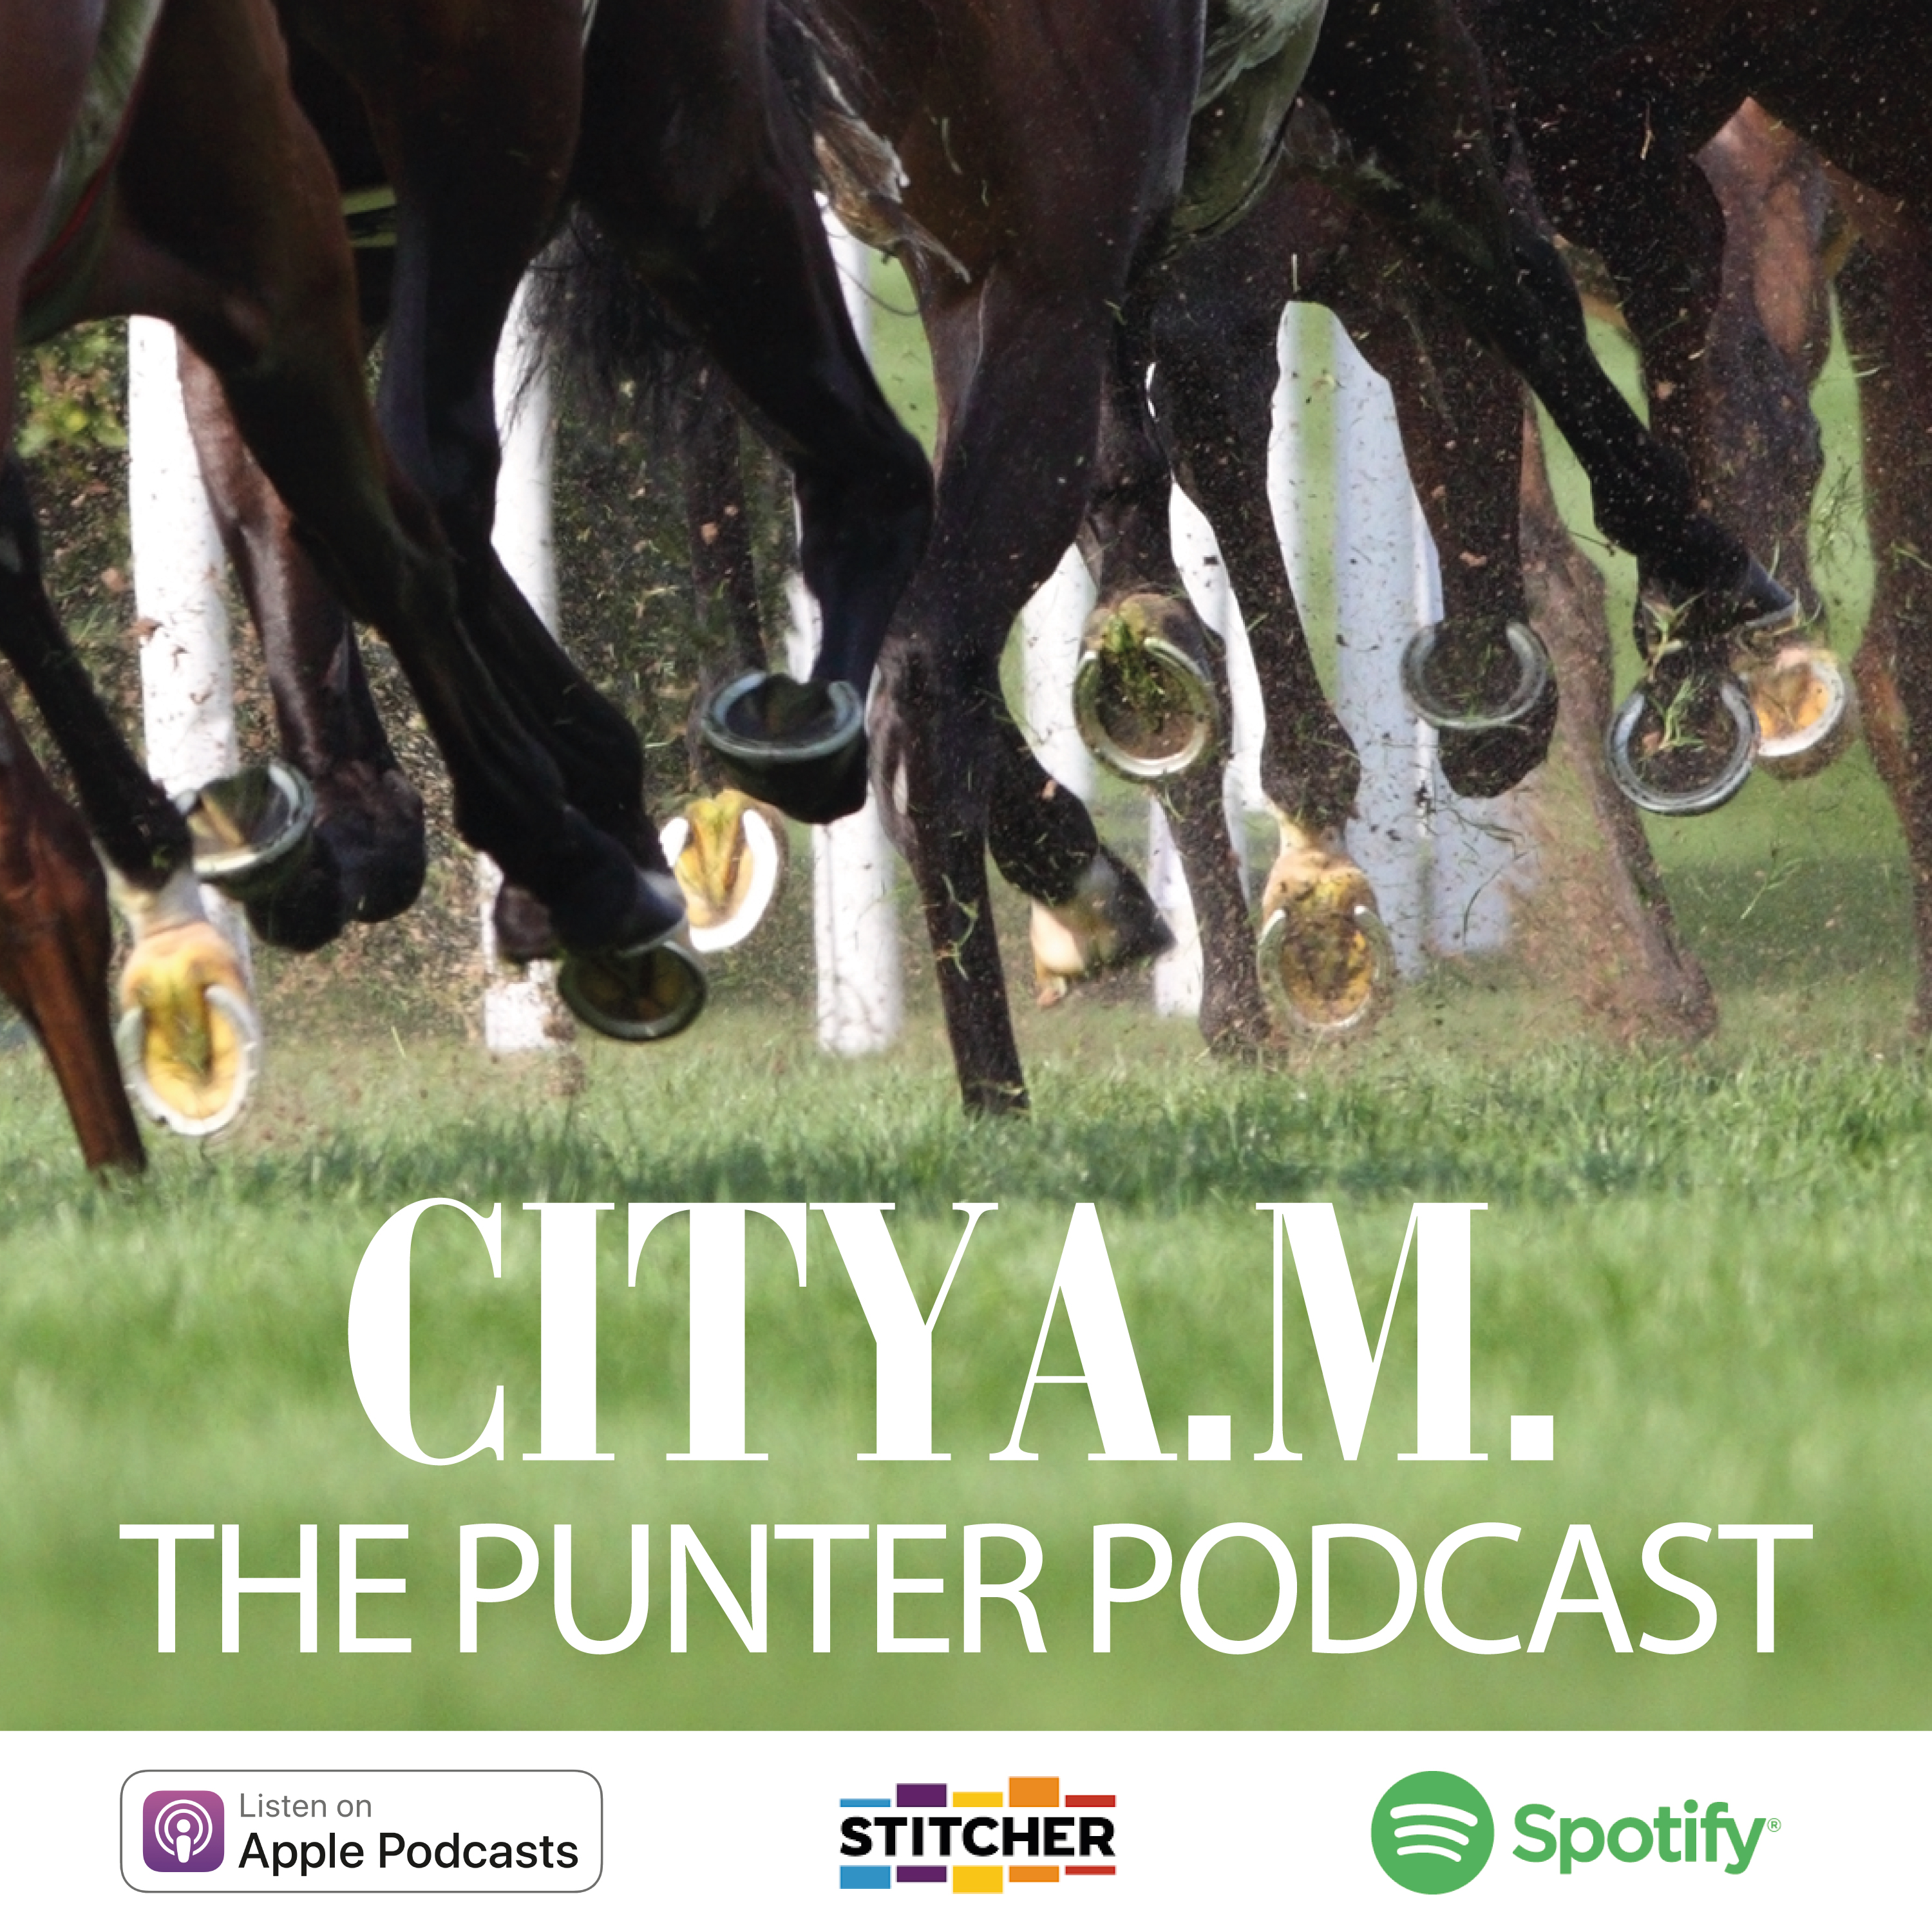 February 25th - Punter Podcast Summary